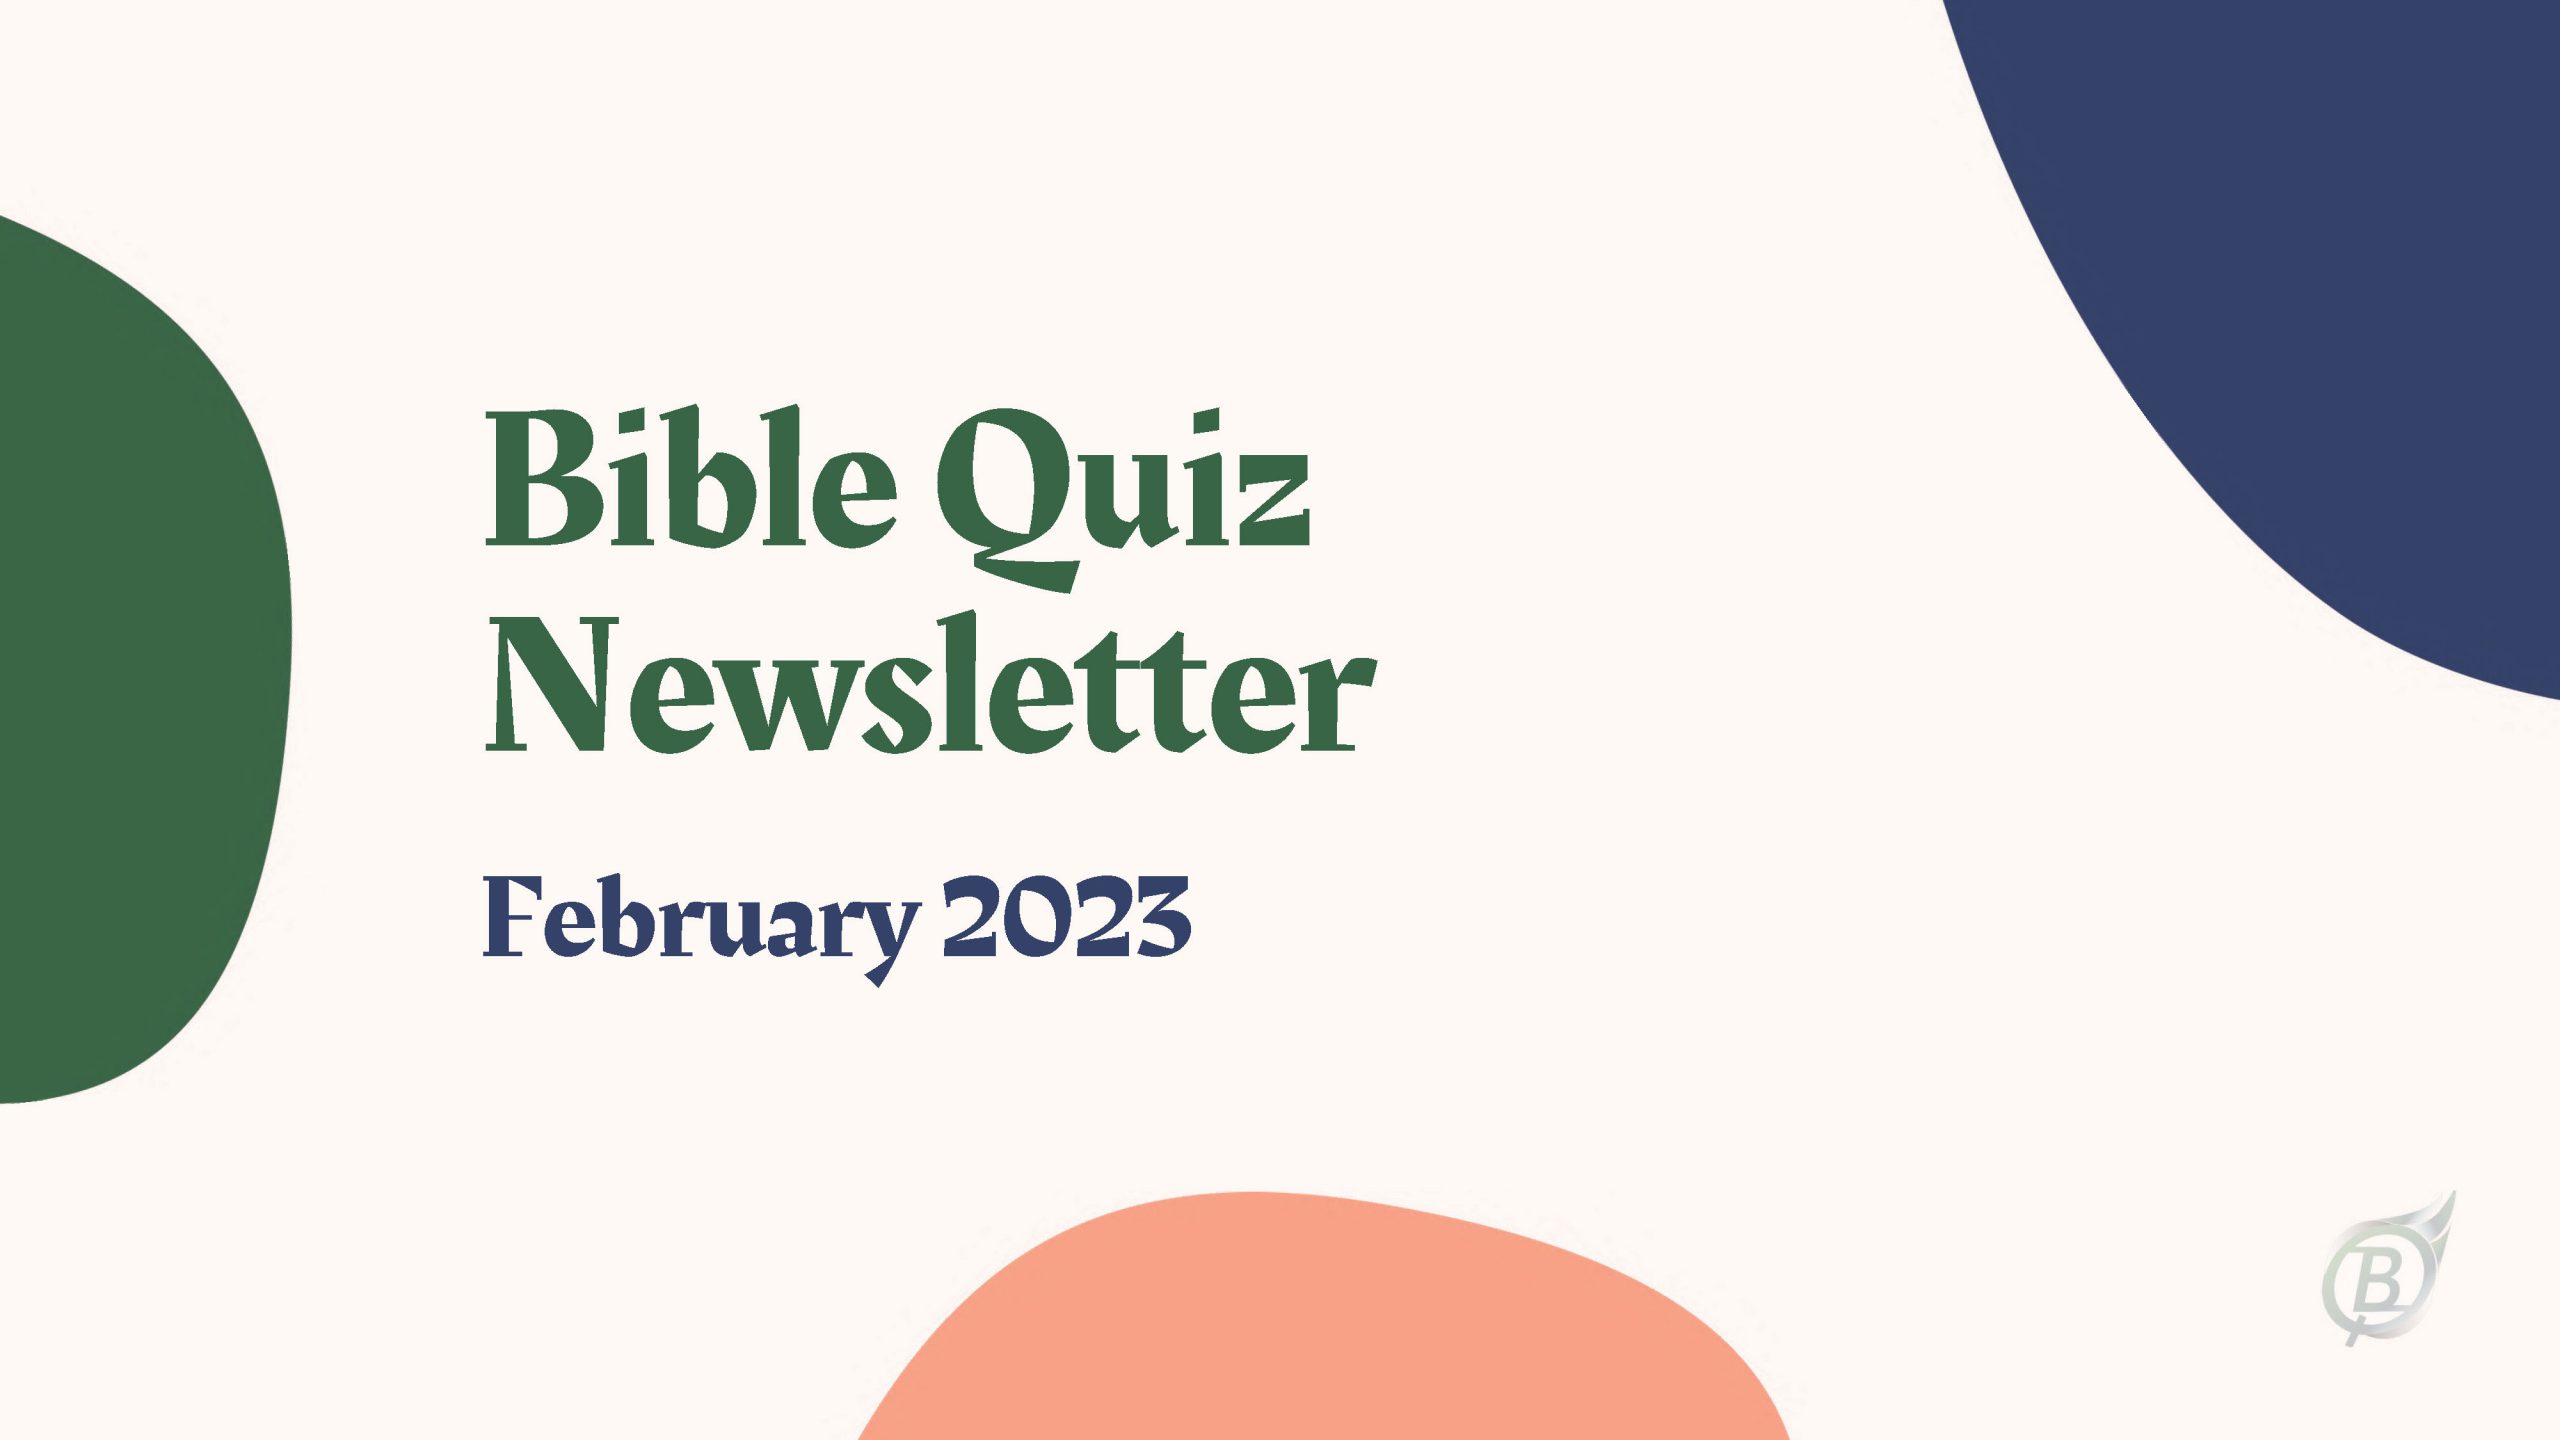 Bible Quiz Newsletter - February 2023